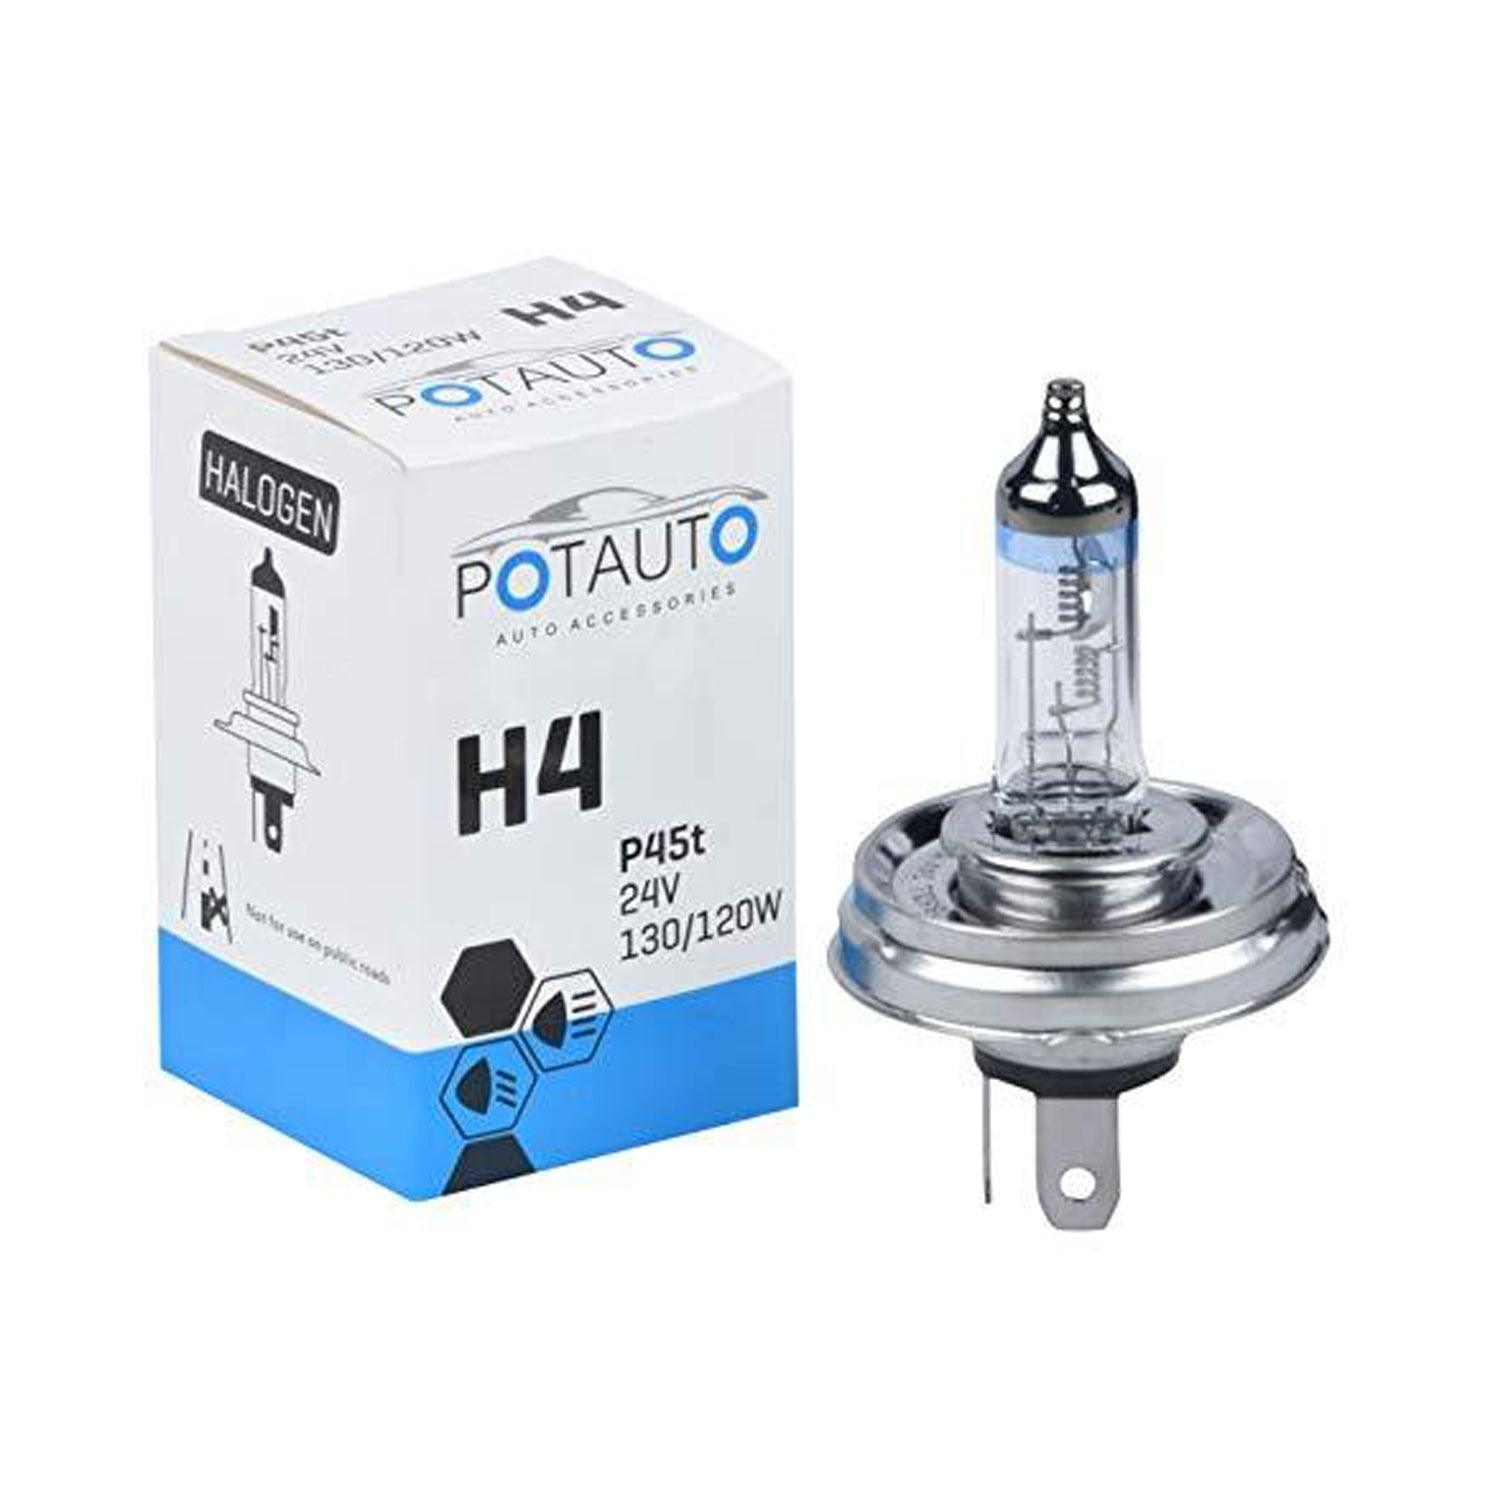 Potauto H4 Headlight Bulb P45t (24V,130/120W) - Autosparz